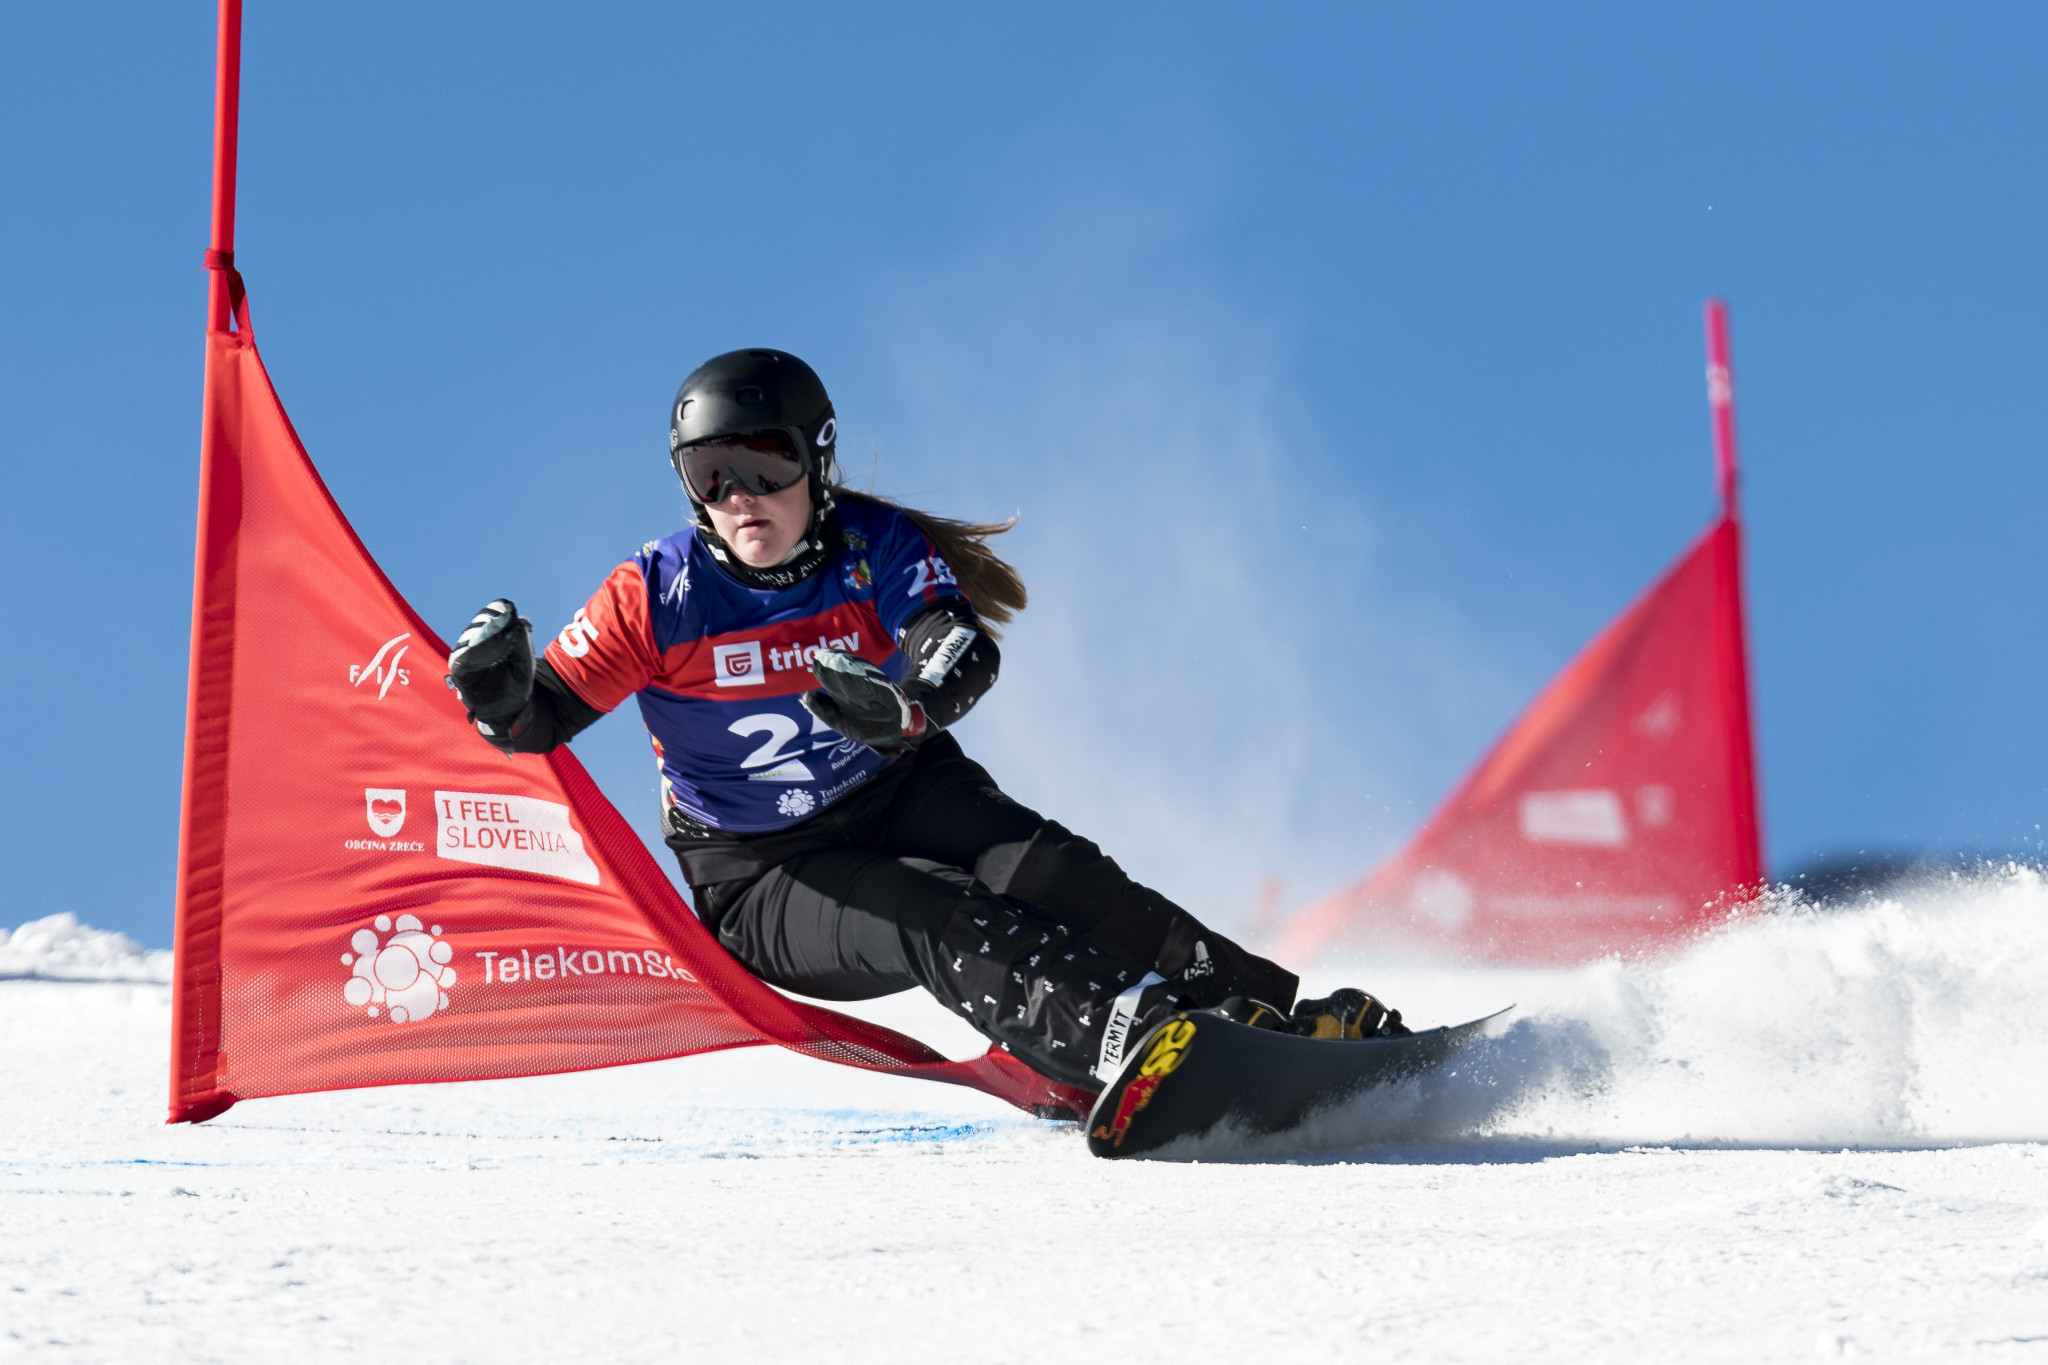 World champions Karl and Nadyrshina lead parallel slalom fields at Bad Gastein Snowboard World Cup